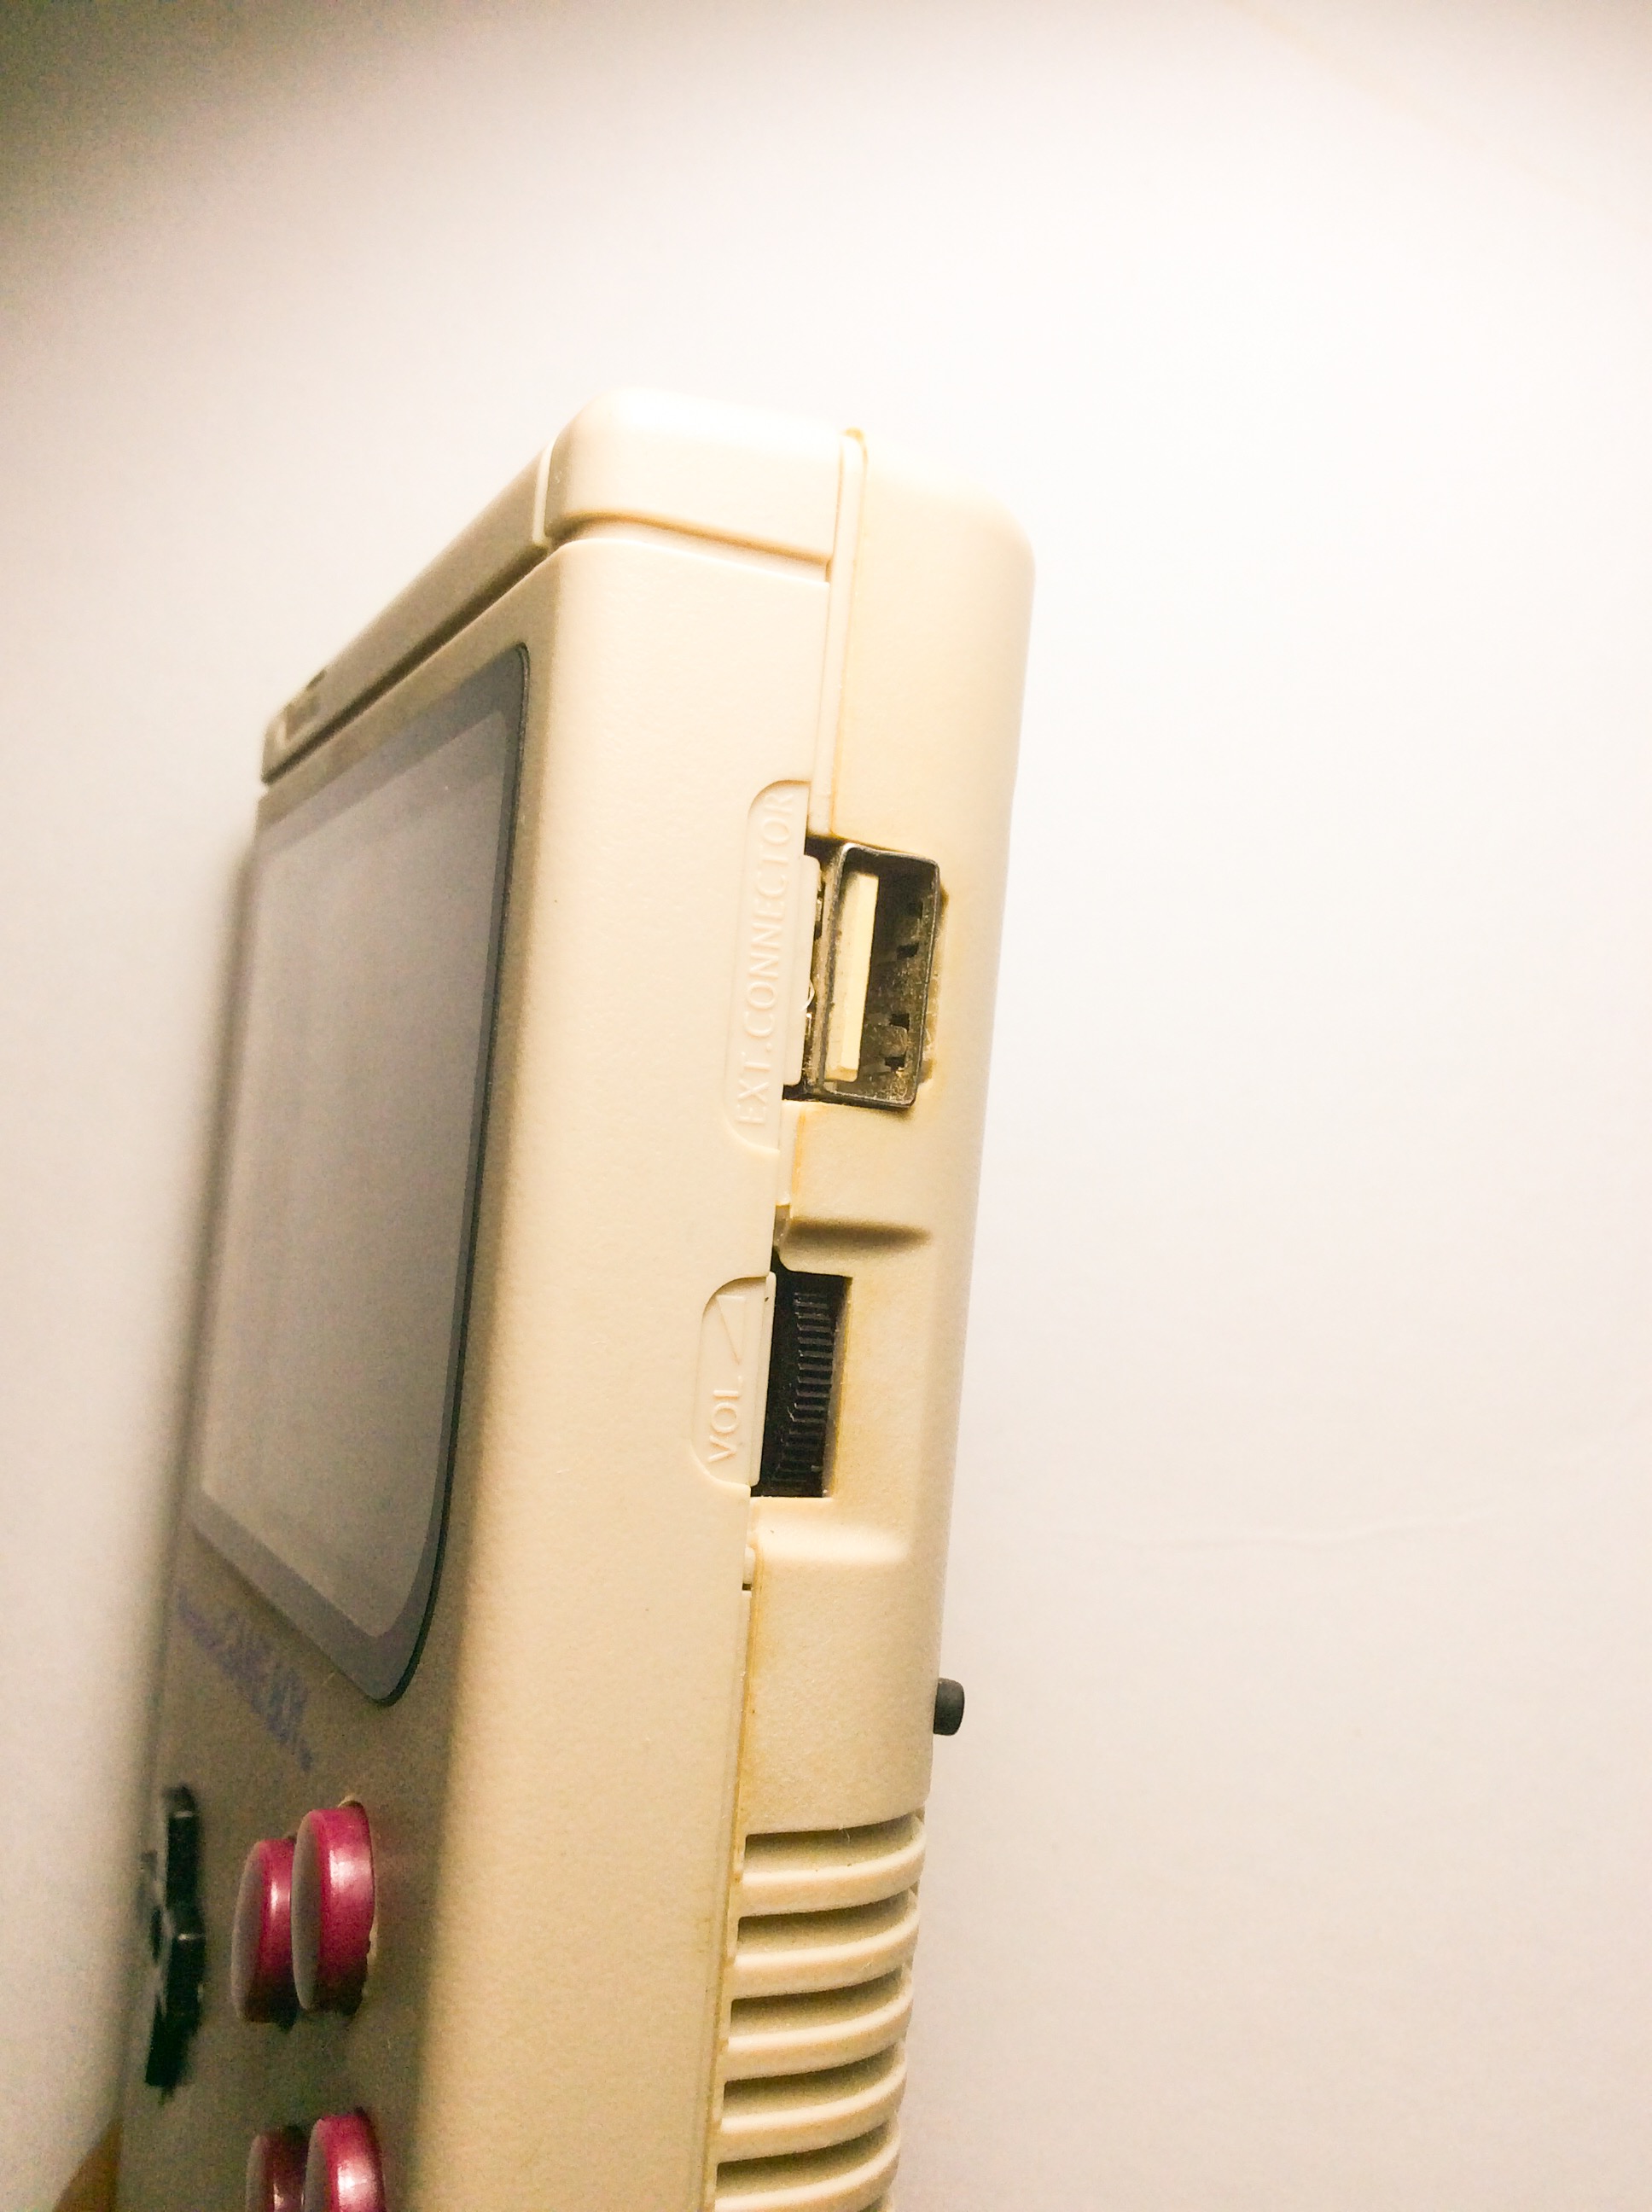 Game Boy Zero USB port